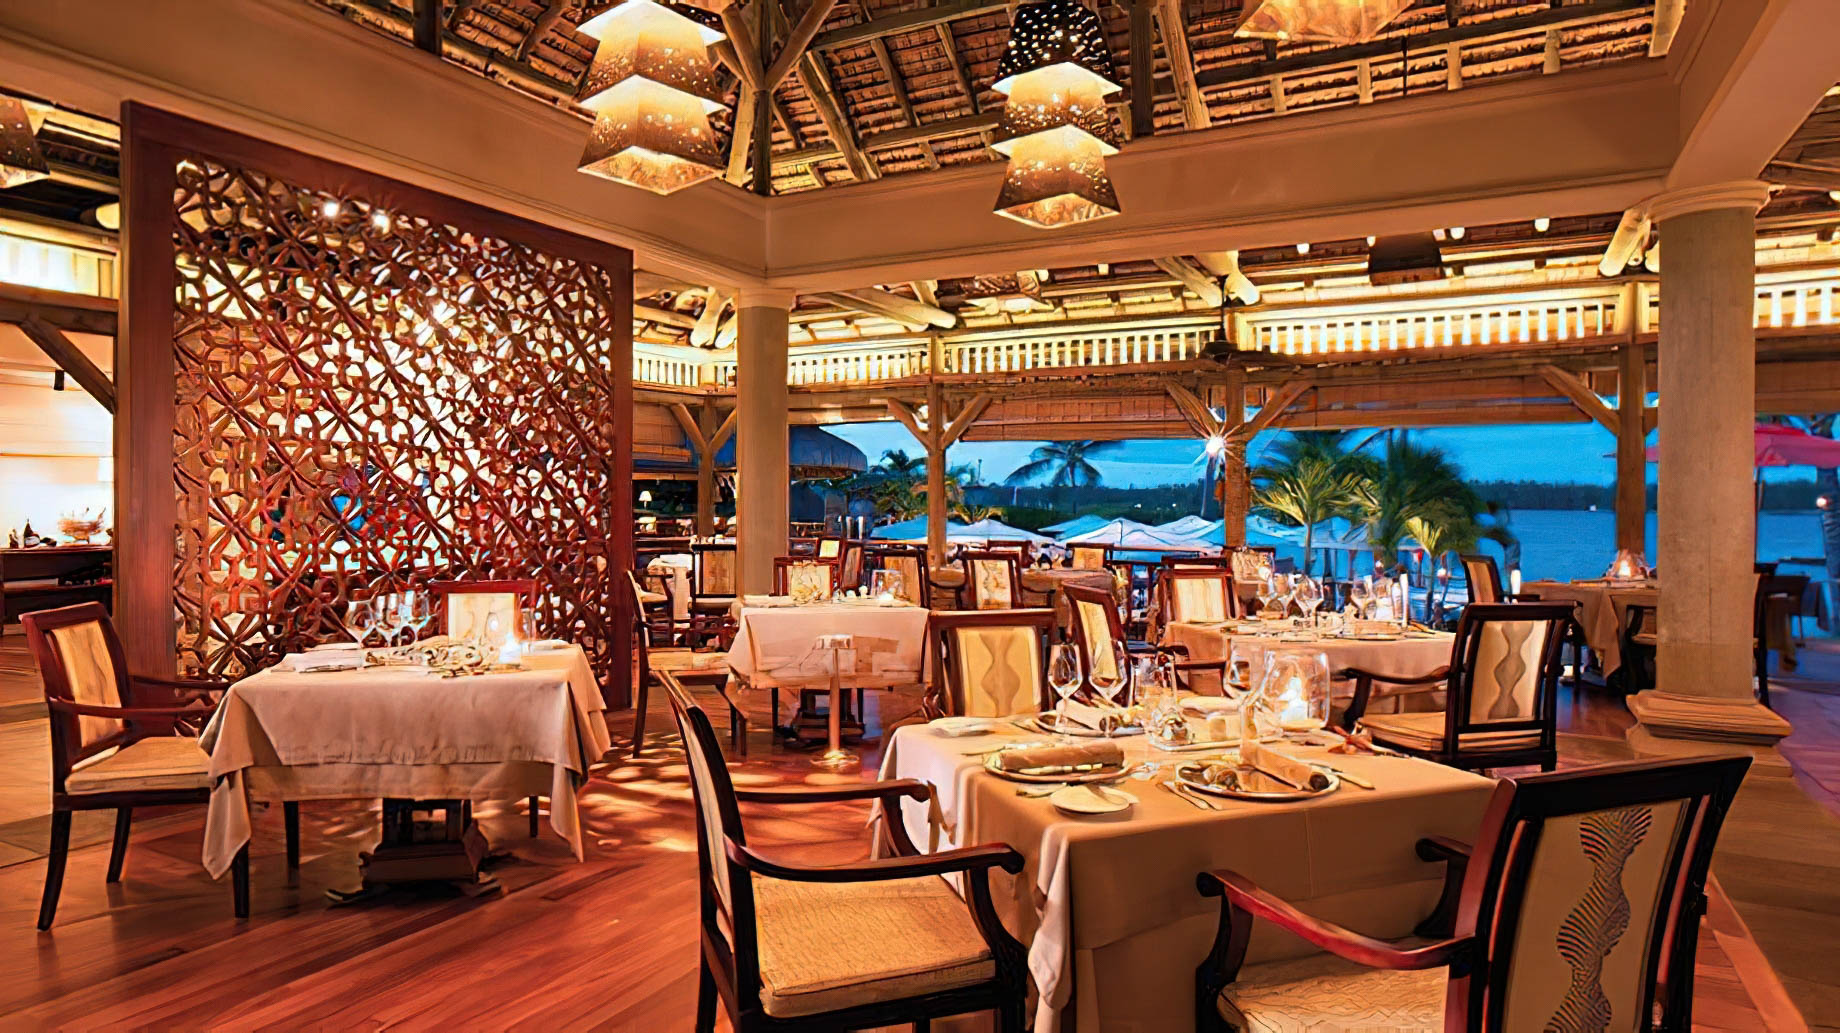 Constance Prince Maurice Resort – Mauritius – Archipel Restaurant Dining